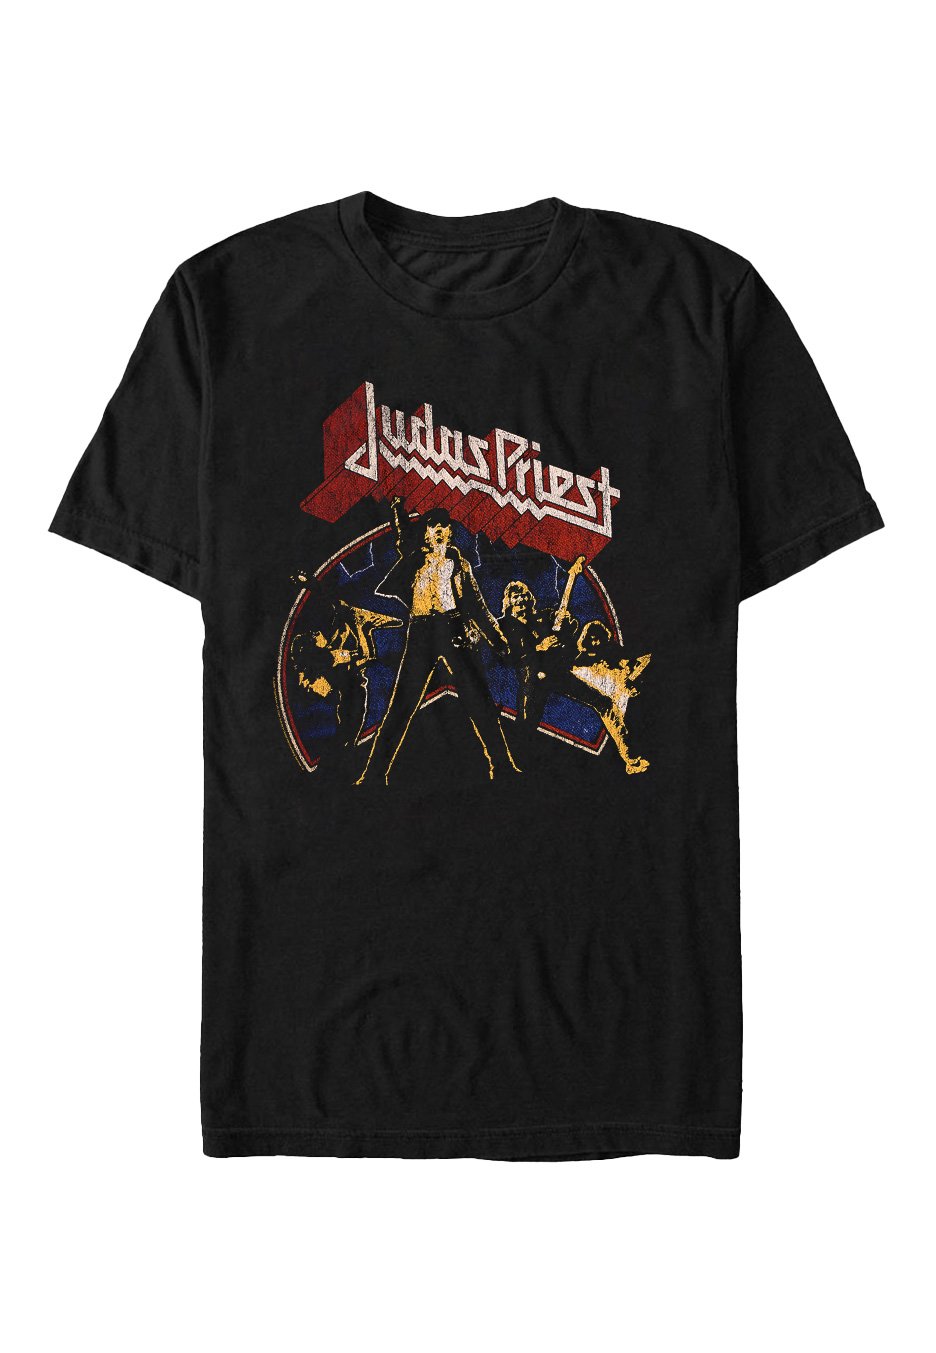 Judas Priest - Unleashed Version 2 - T-Shirt